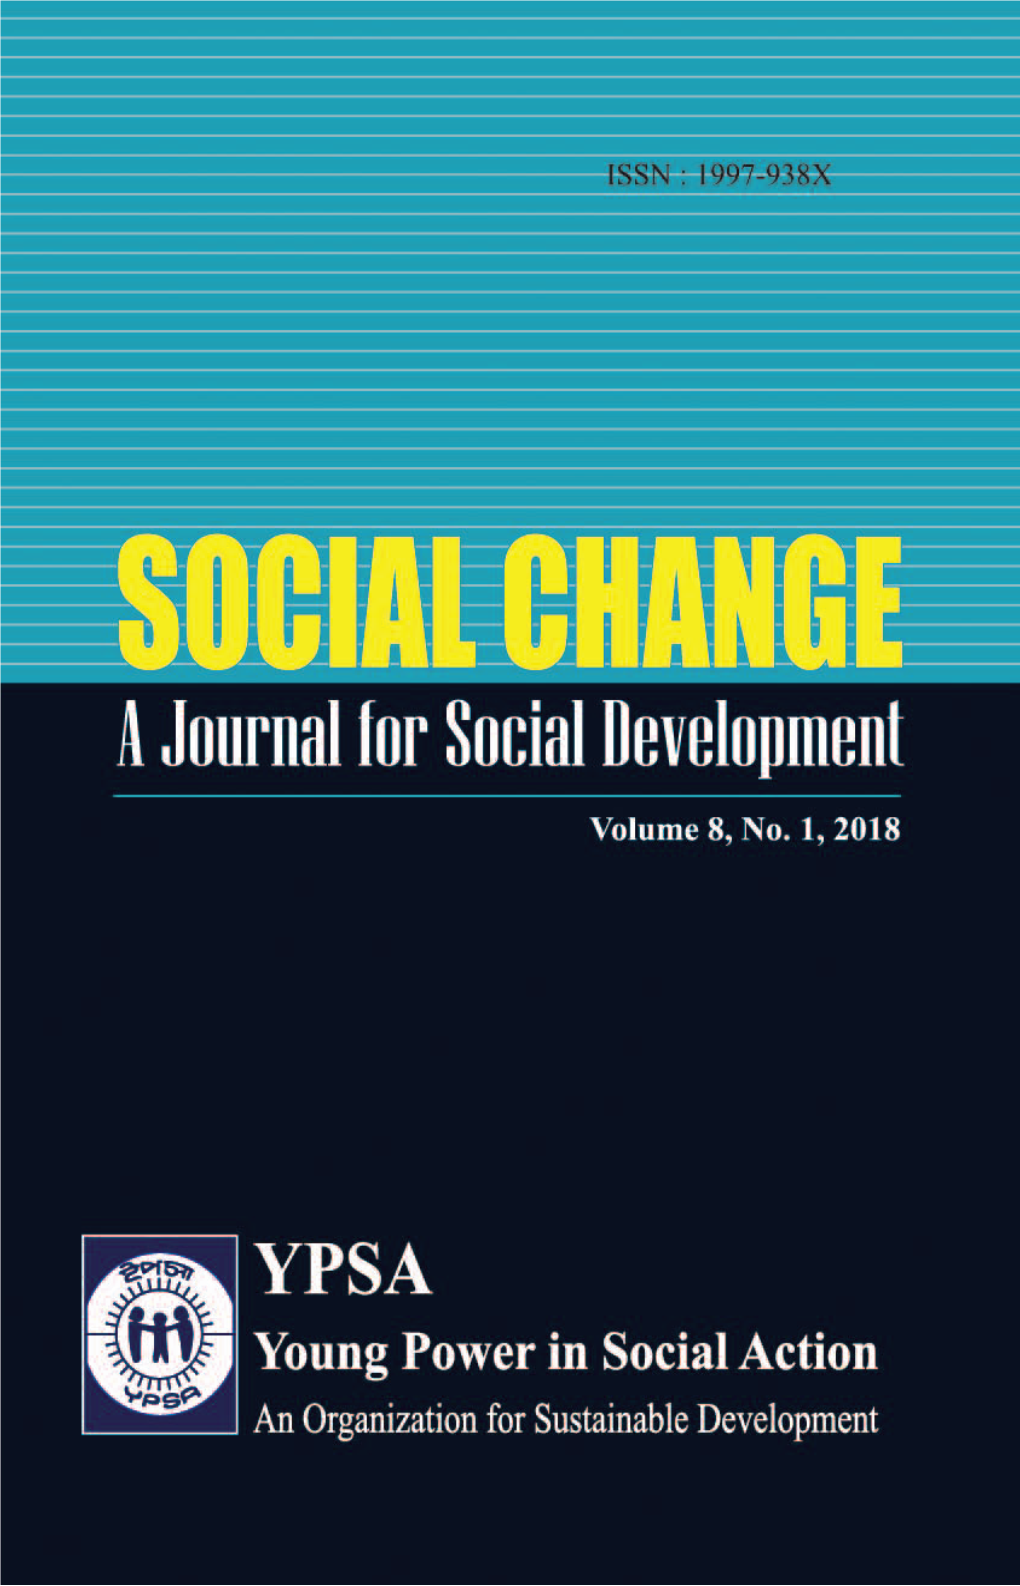 SOCIAL CHANGE a Journal for Social Development